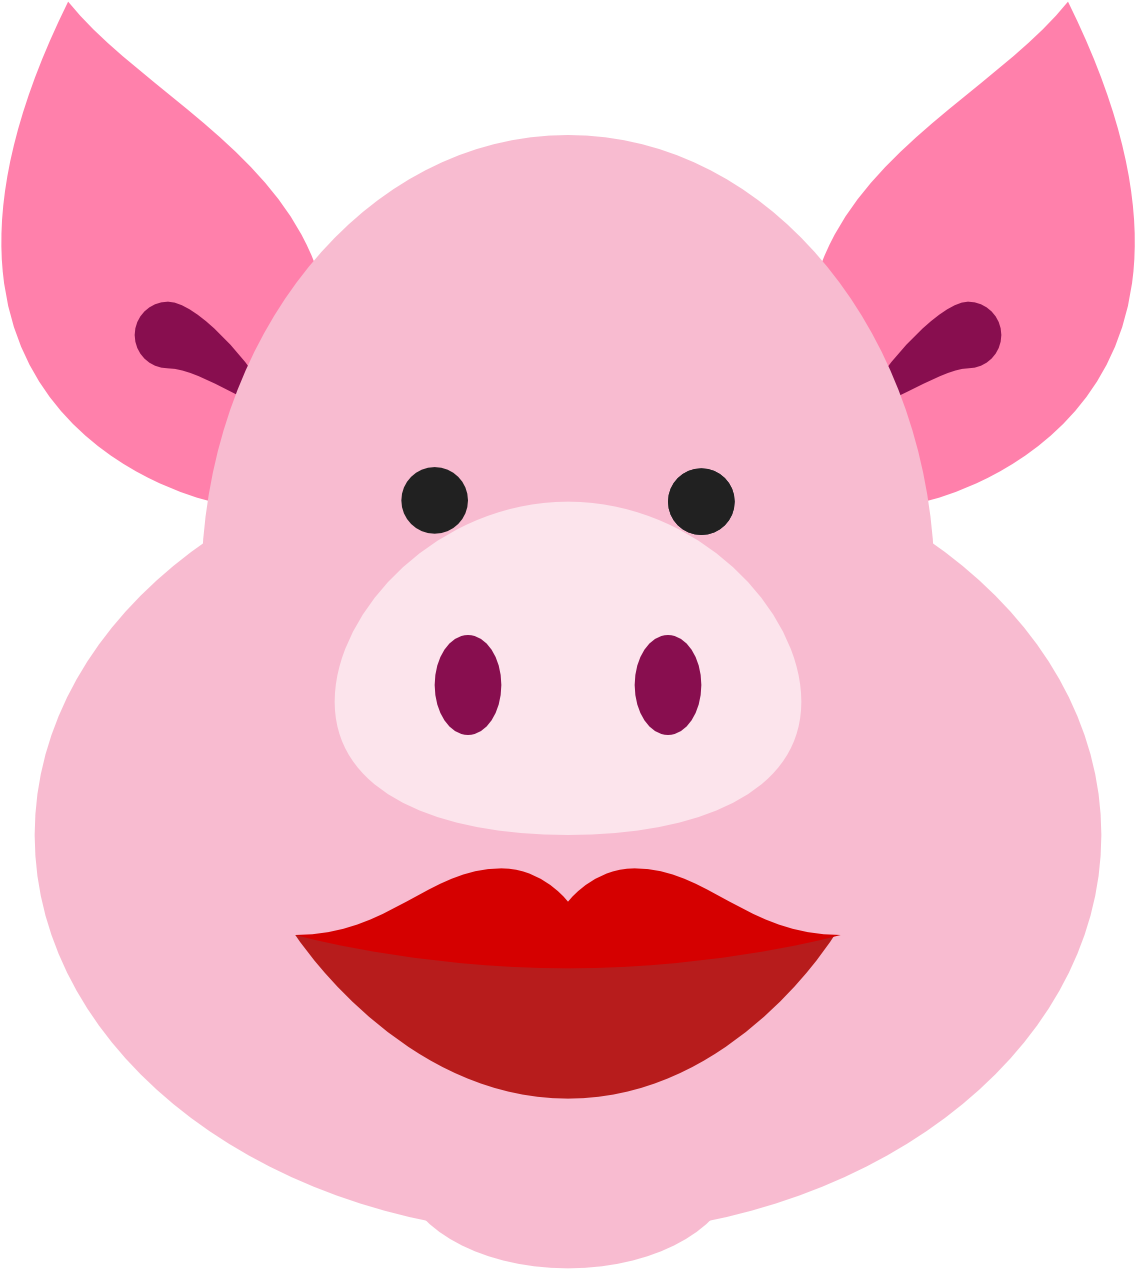 Pig With Lipstick Icon Free - Illustration (1600x1600)